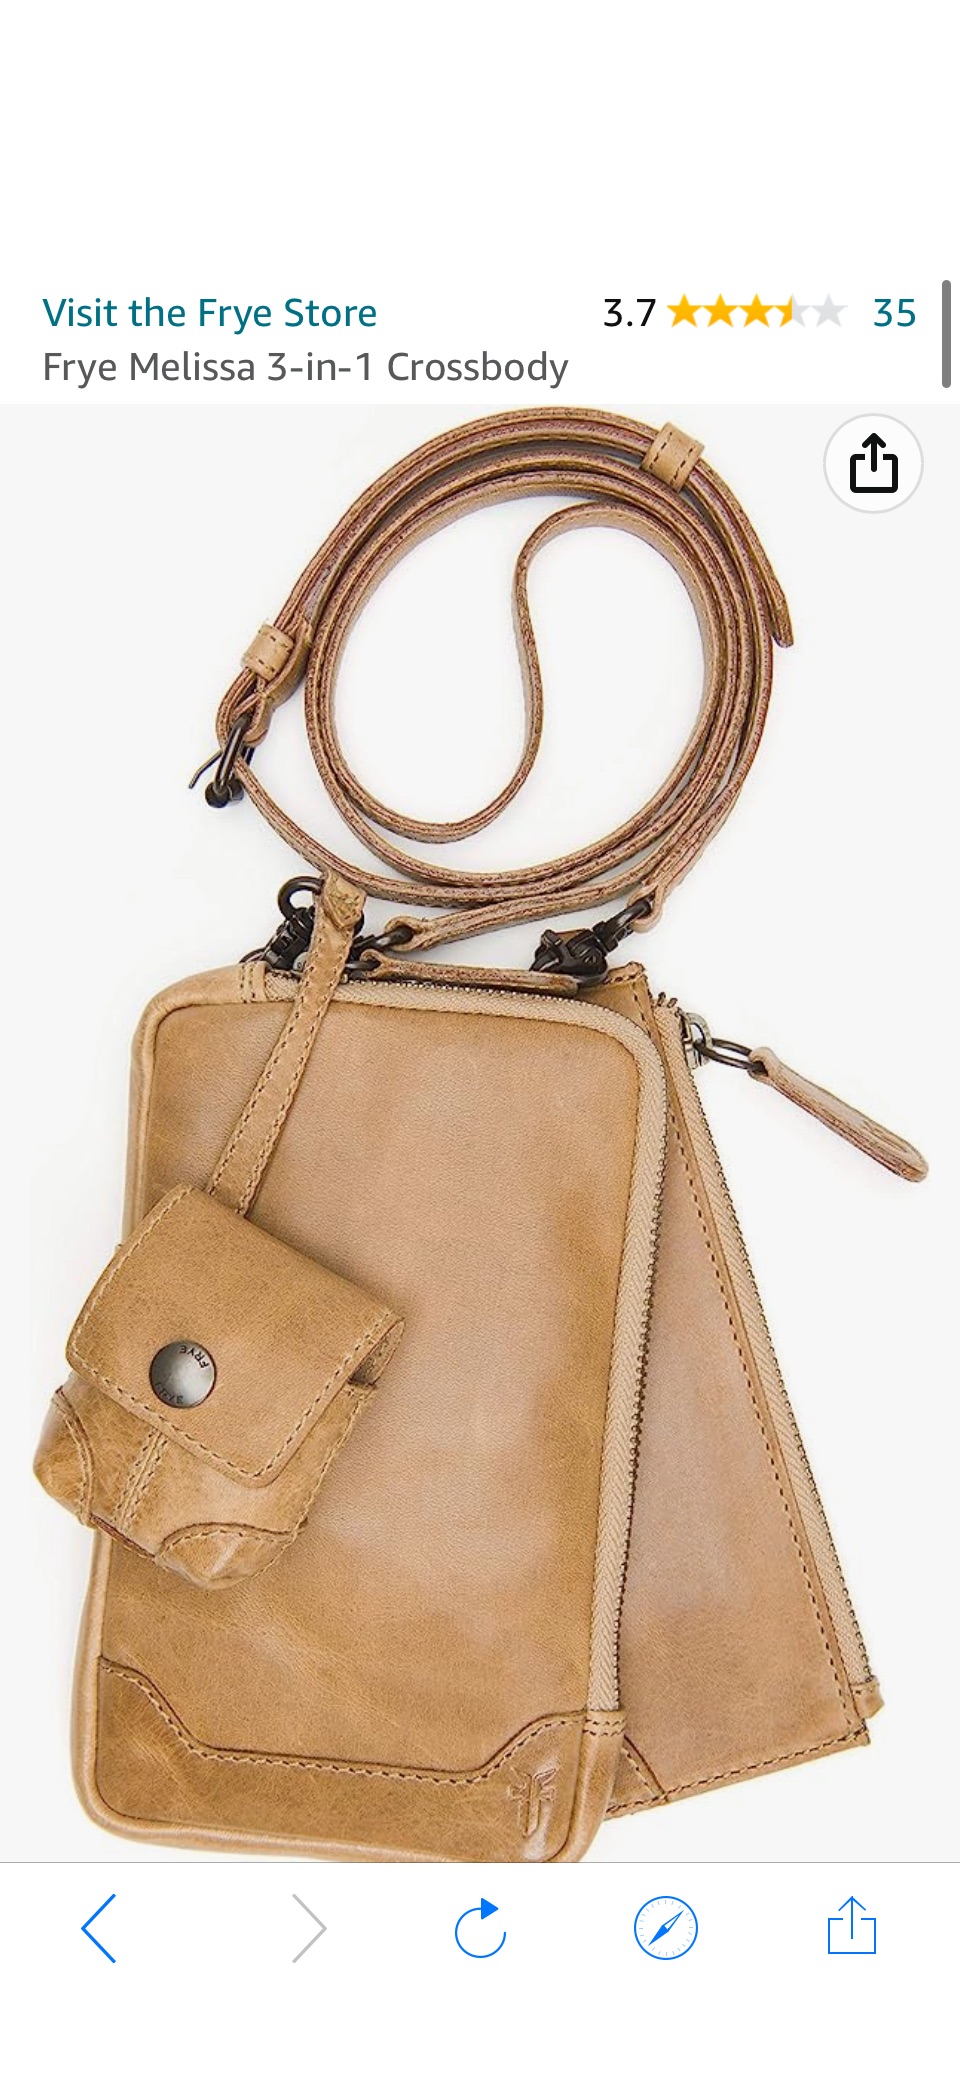 Frye womens Melissa 3-in-1 Crossbody Bag, Beige, One Size US: Handbags: Amazon.com原价198